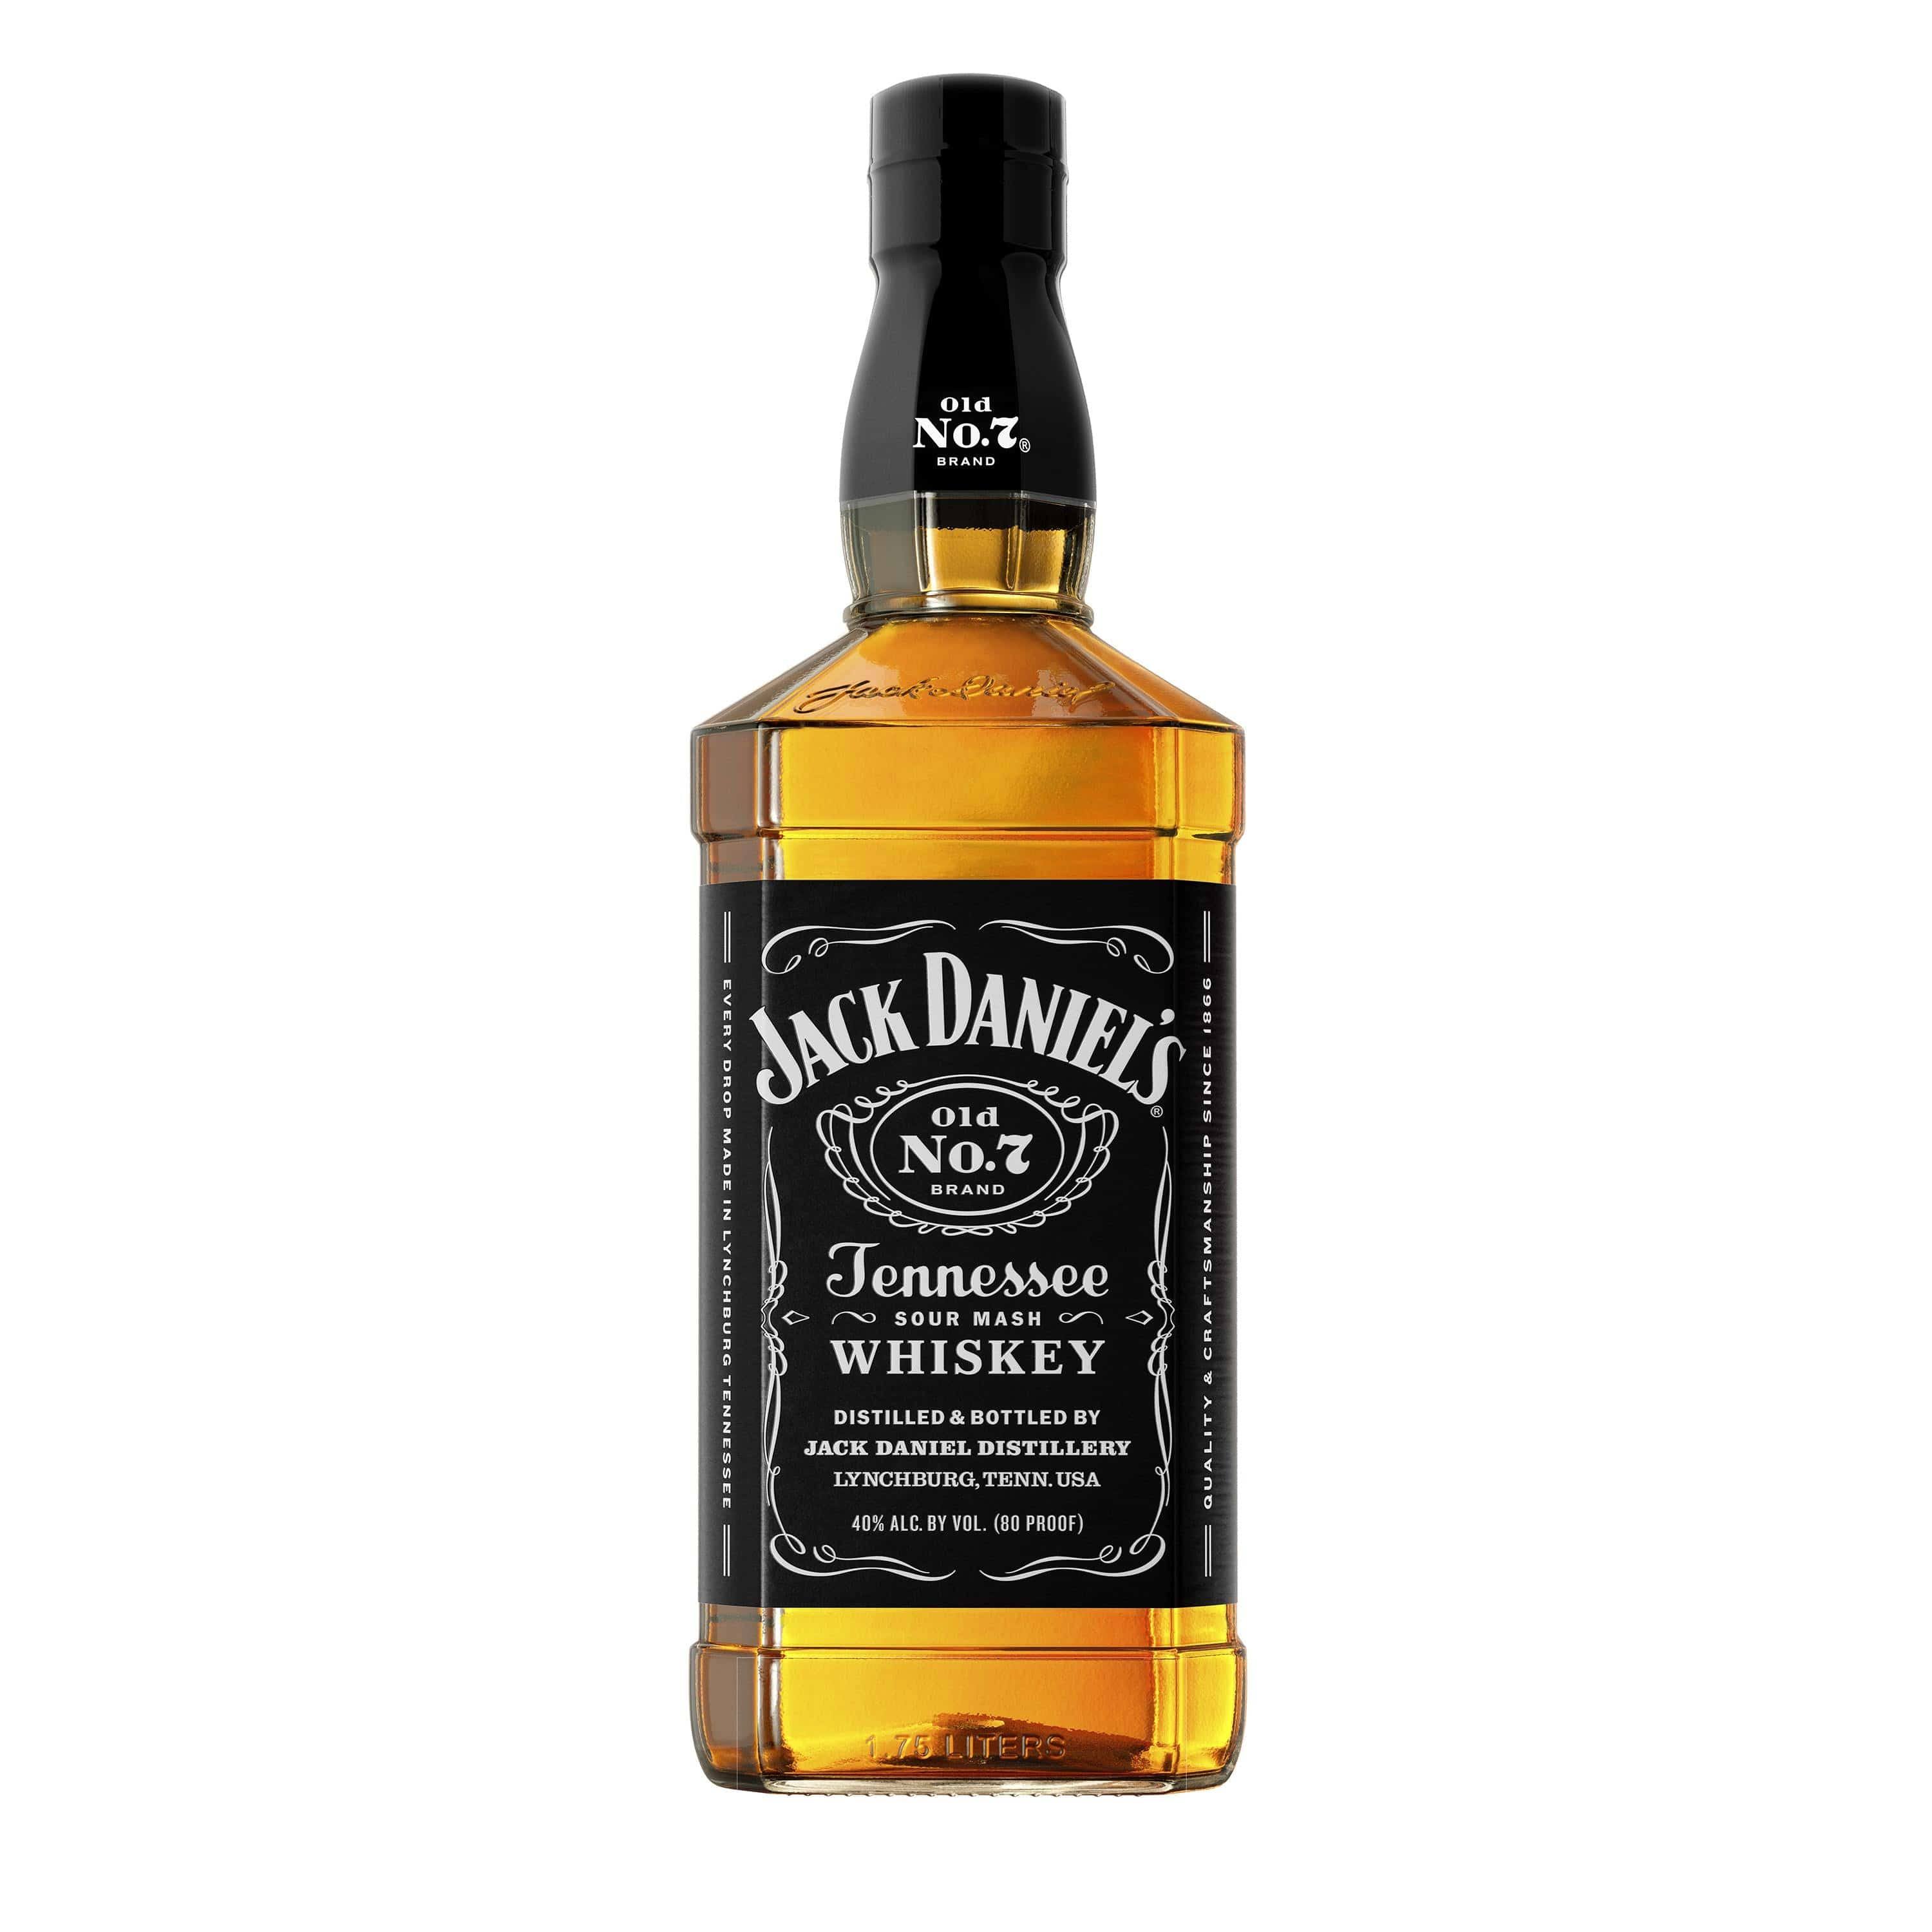 Jack Daniels Tennessee Whiskey - 1.75l